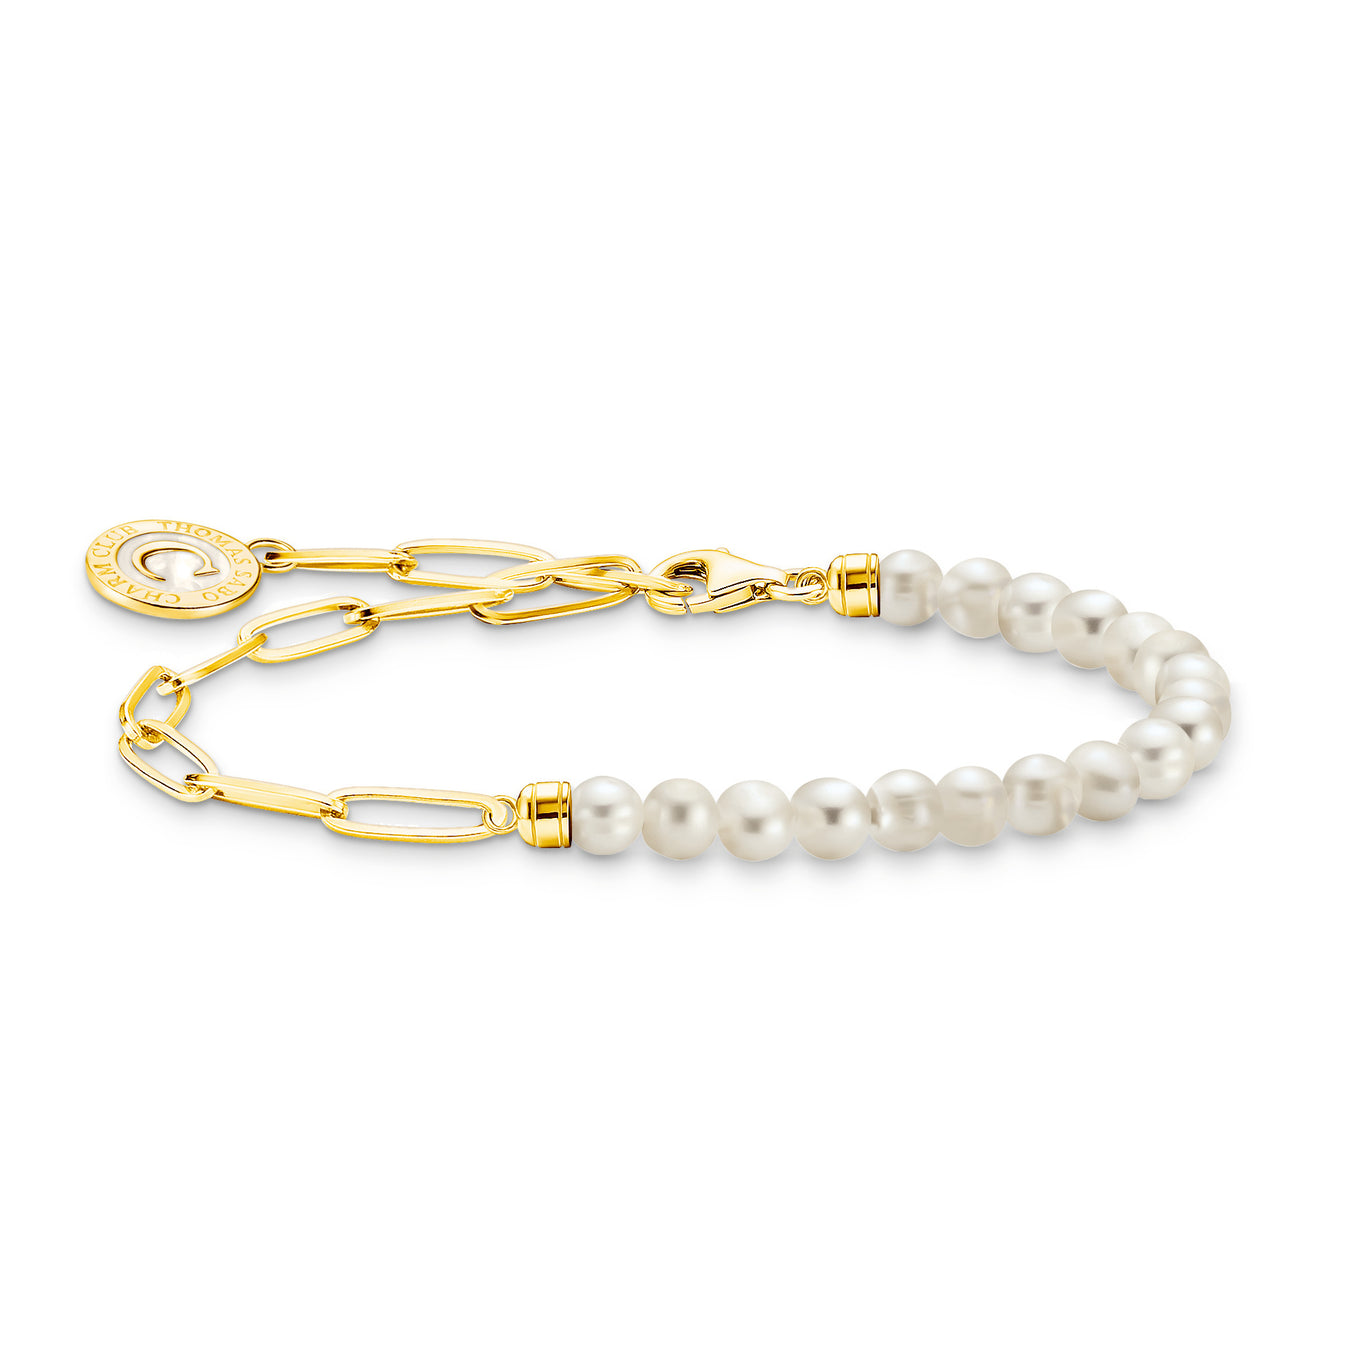 Thomas Sabo Gold Member Charm Bracelet with White Pearls